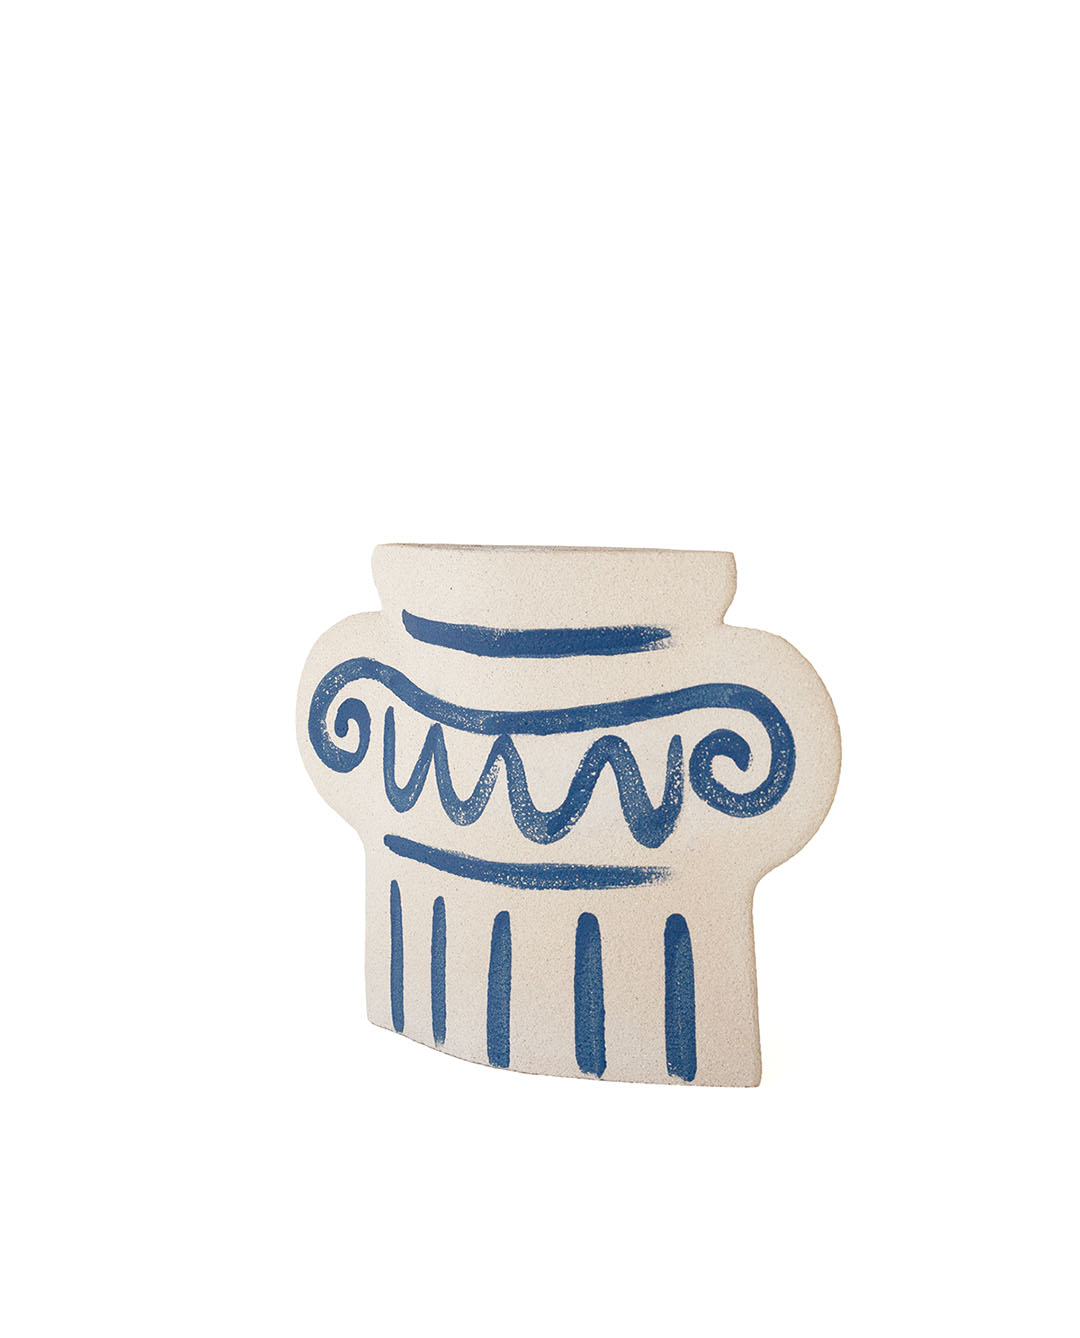 'Greek Column' Ceramic Illustrated Vase